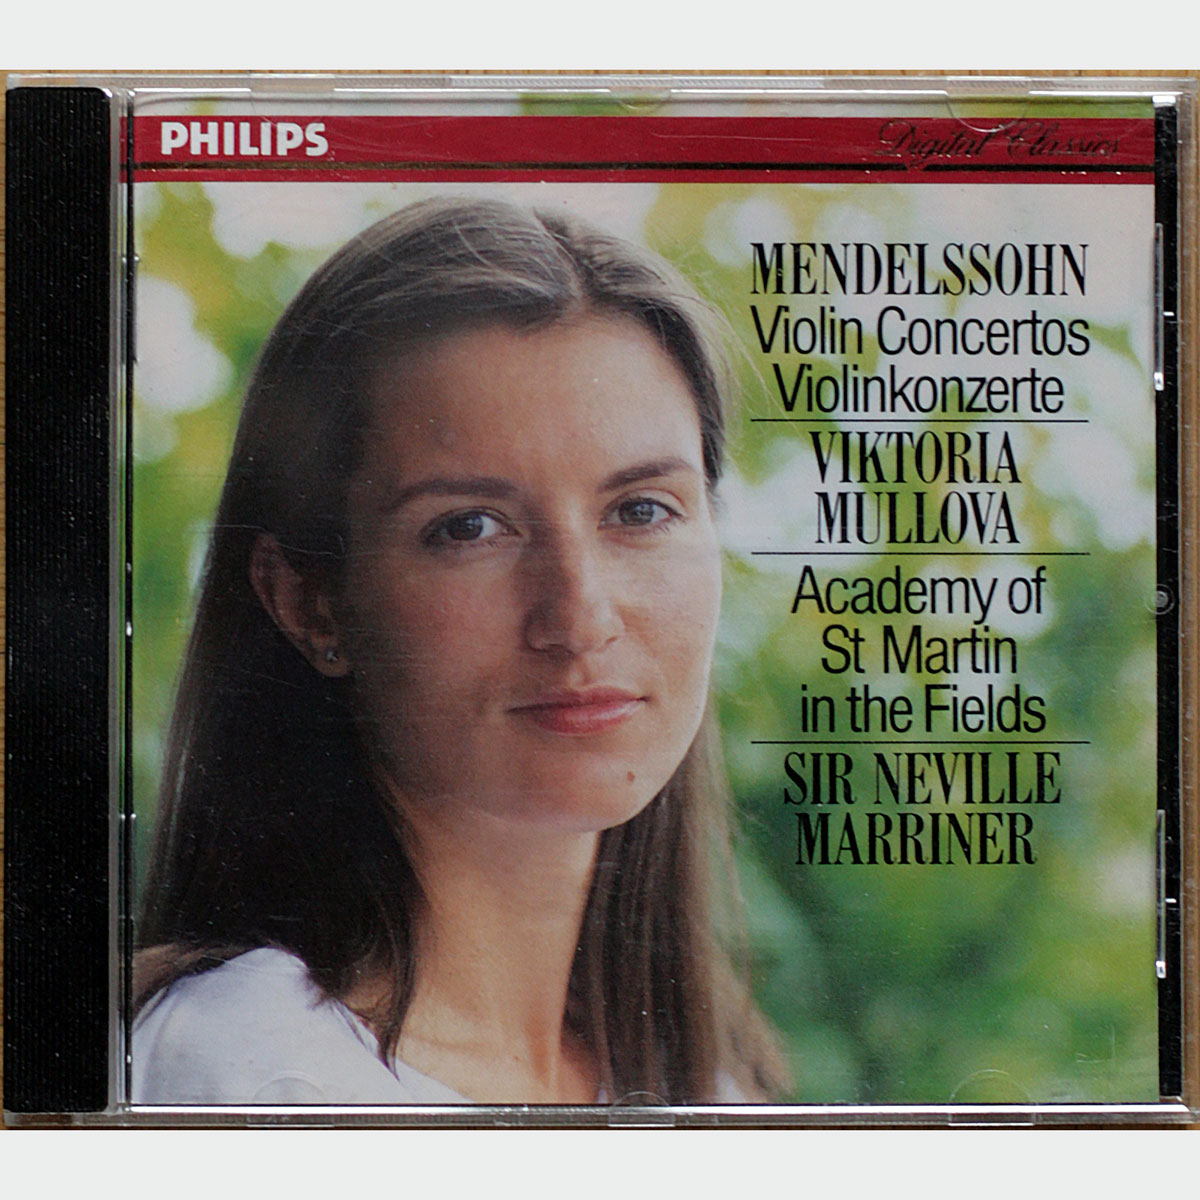 Mendelssohn • Concertos pour violon • Violin concertos • Philips 432 077-2 • Viktoria Mullova • Academy of St Martin in the fields • Neville Marriner